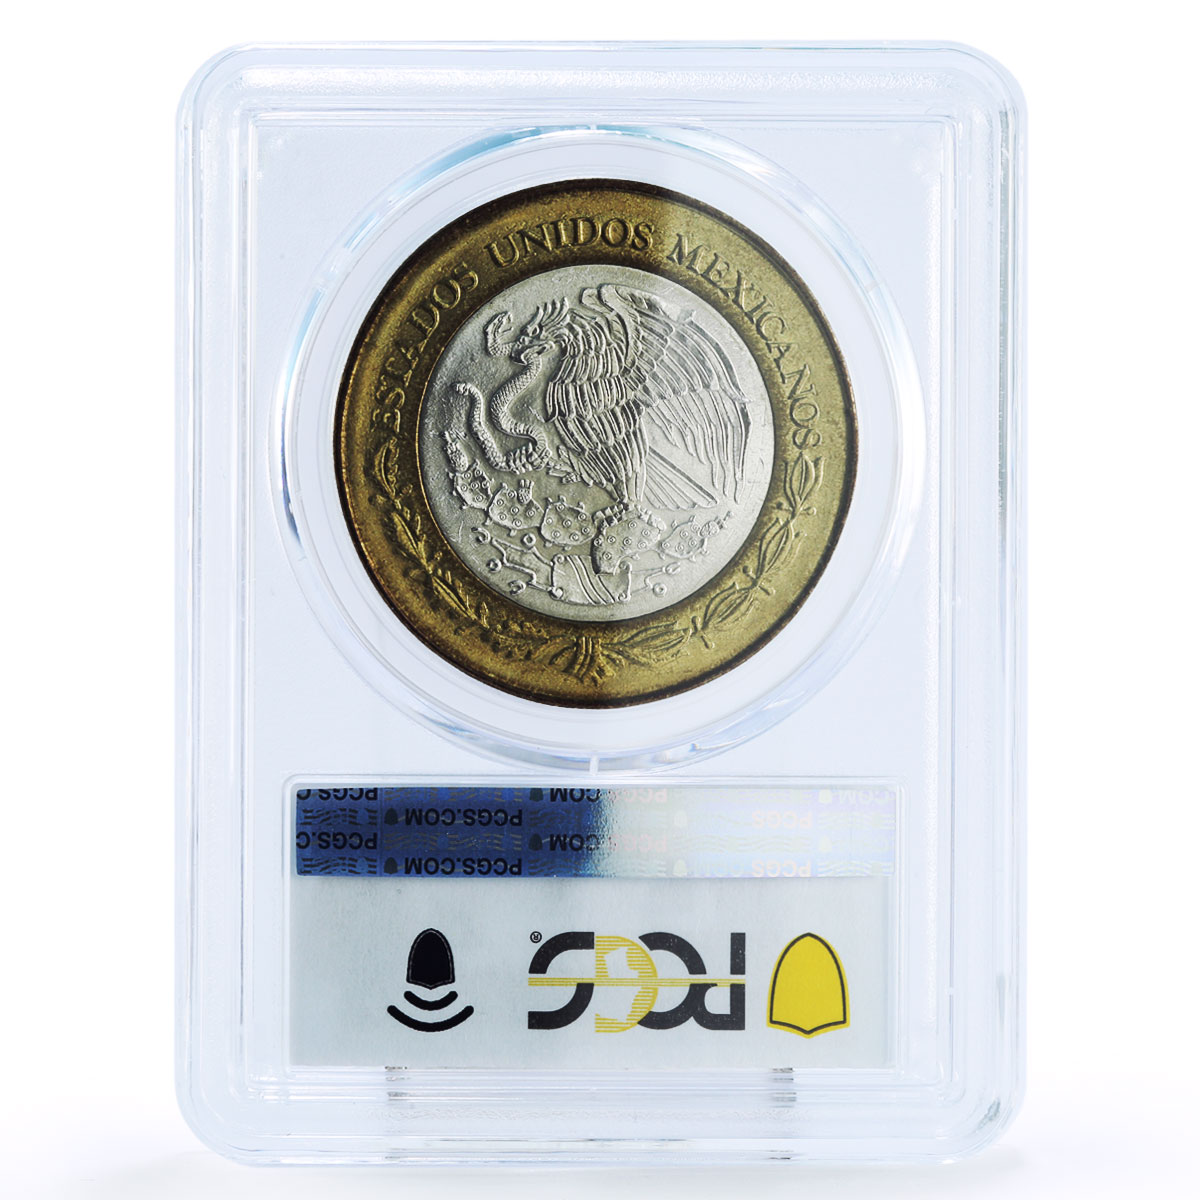 Mexico 100 pesos Monetary Reform Liberty Cap MS64 PCGS bimetal coin 2005